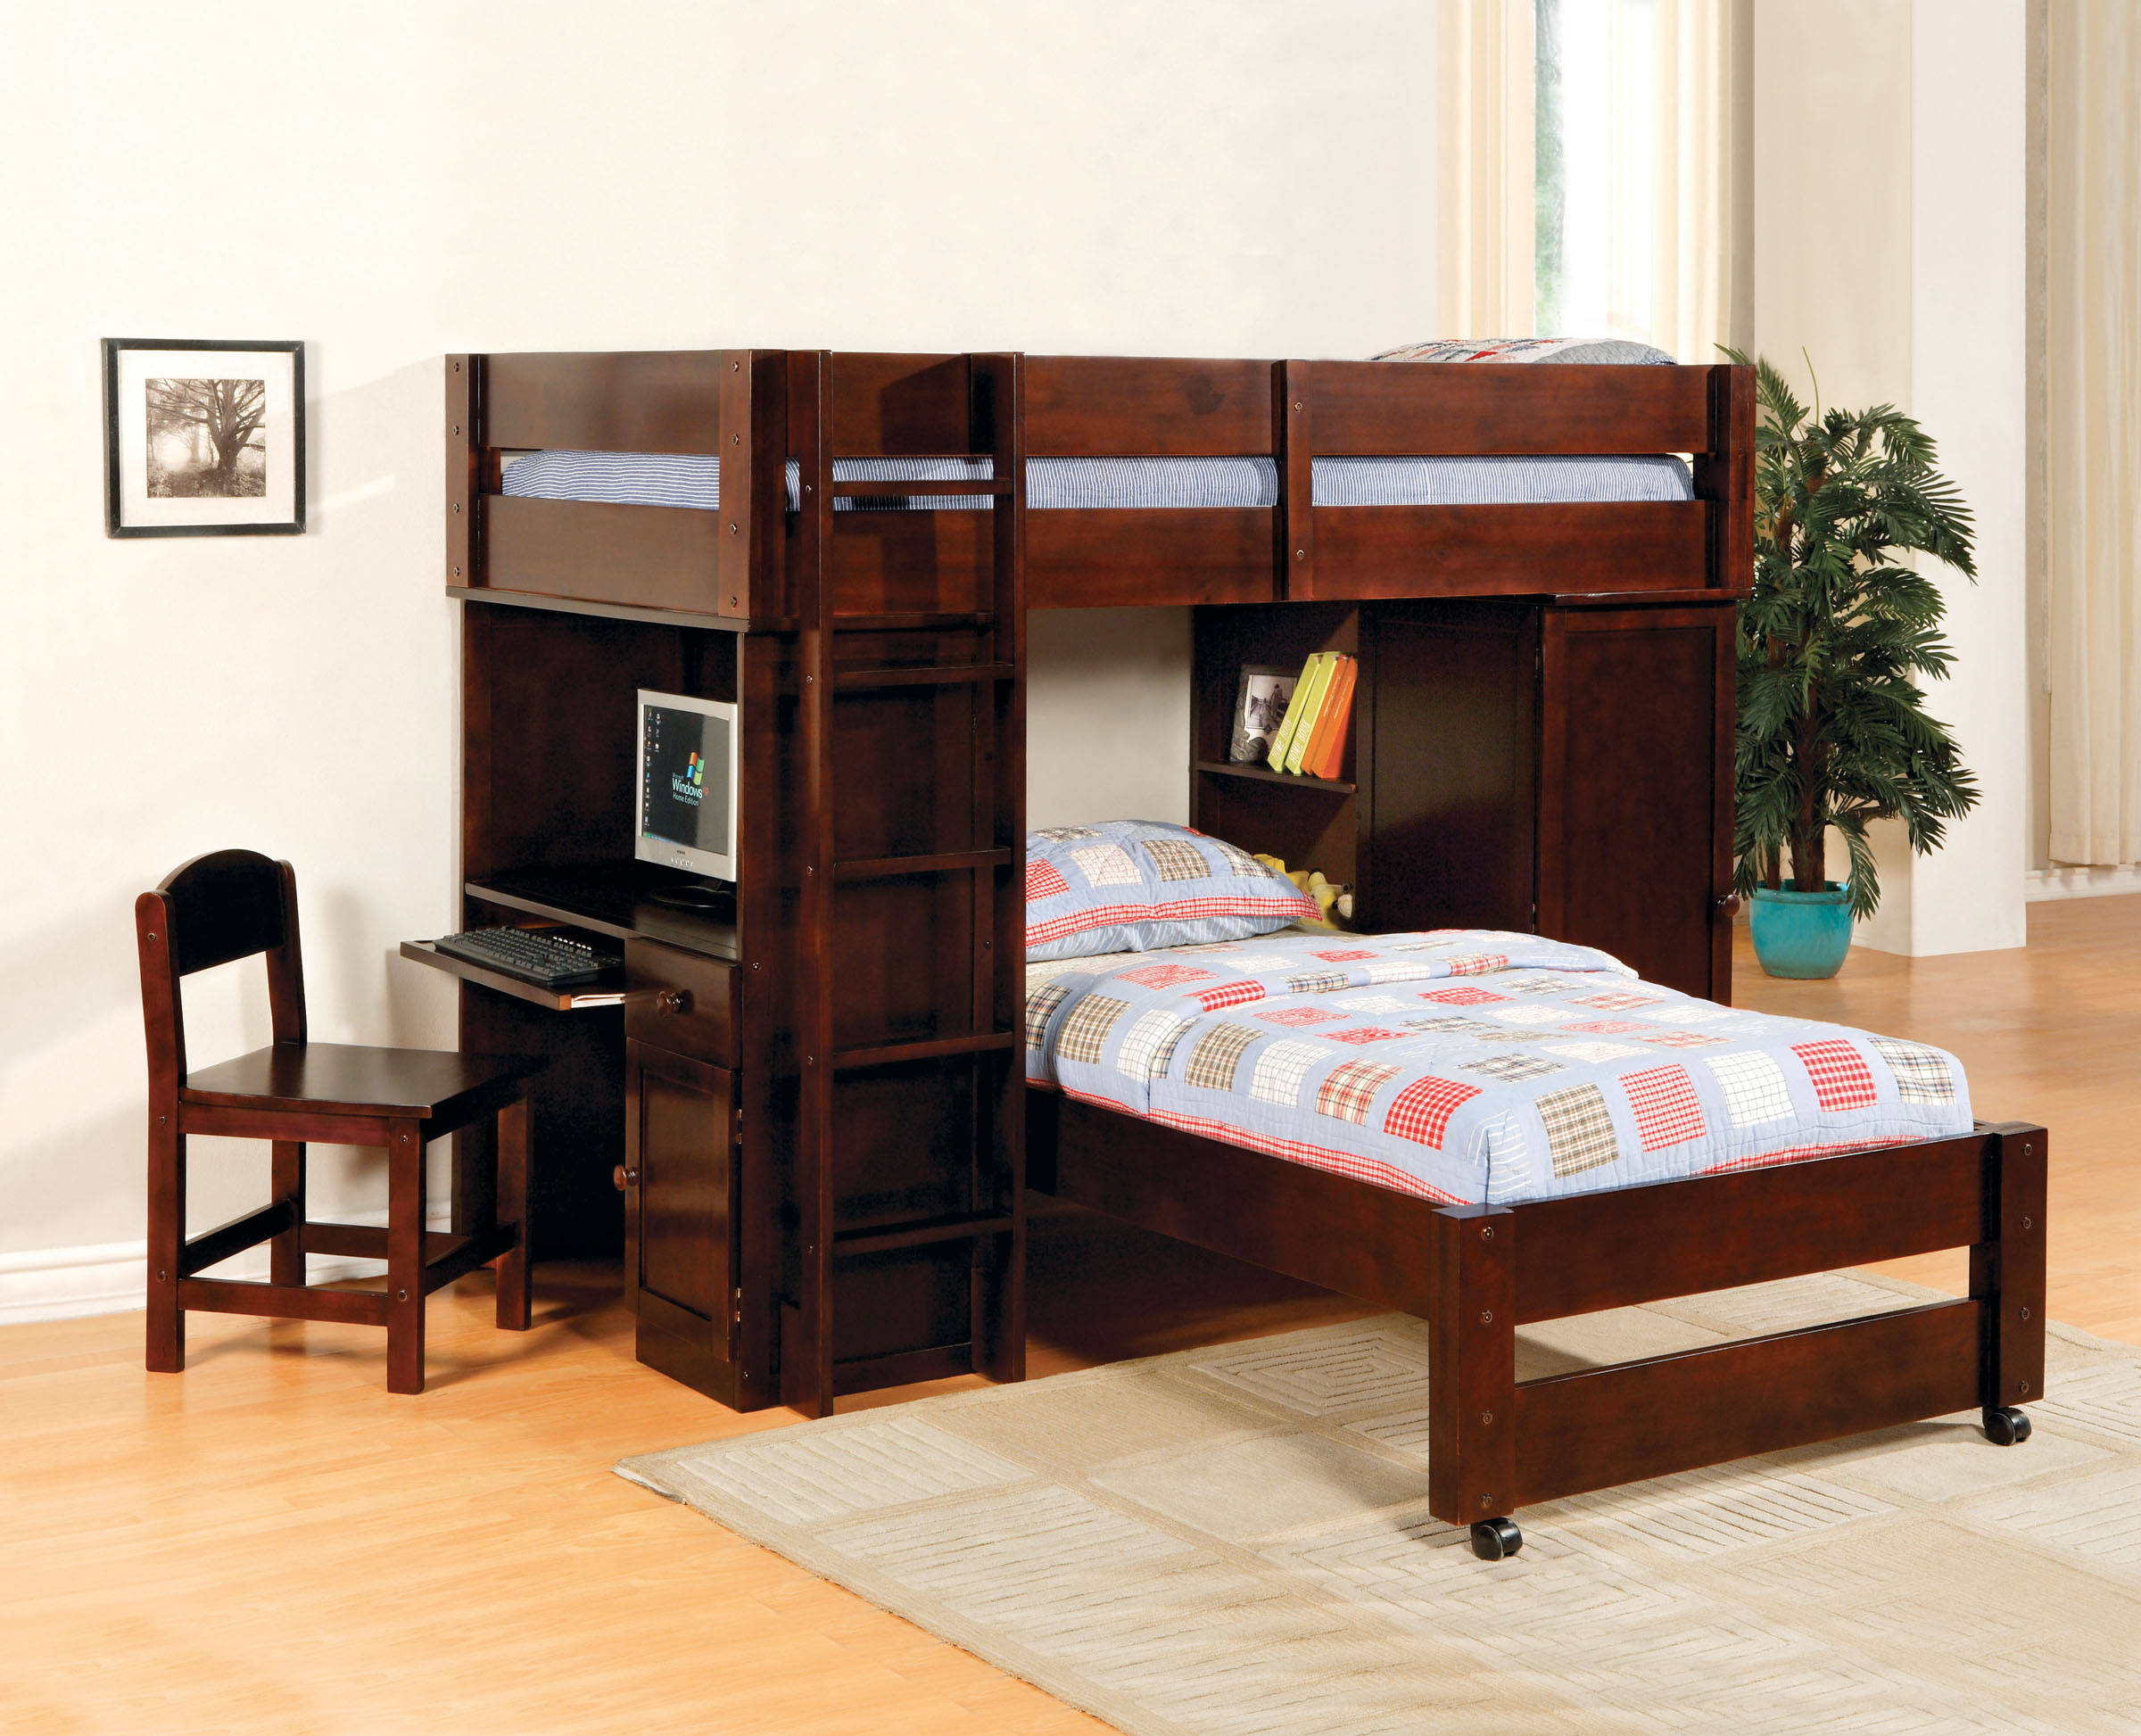 Harford Bunk Bed
(P.O CM-BK529)